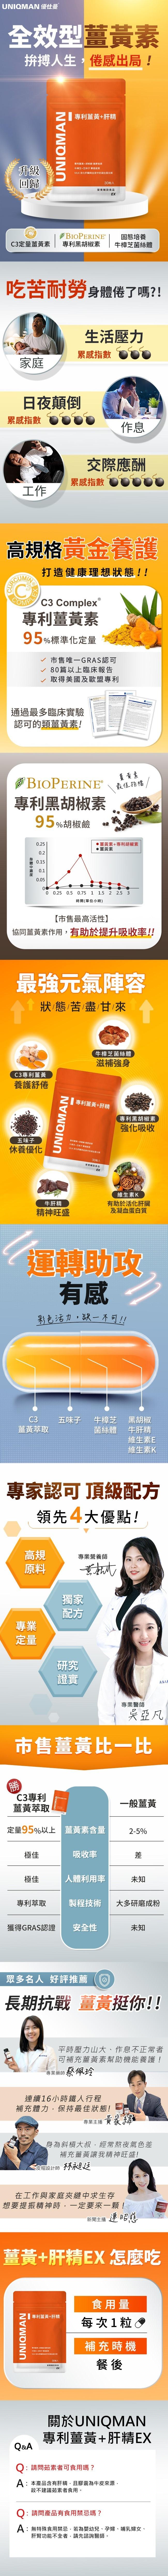 UNIQMAN-薑黃+肝精膠囊食品(30粒/袋)3袋組﻿產品資訊